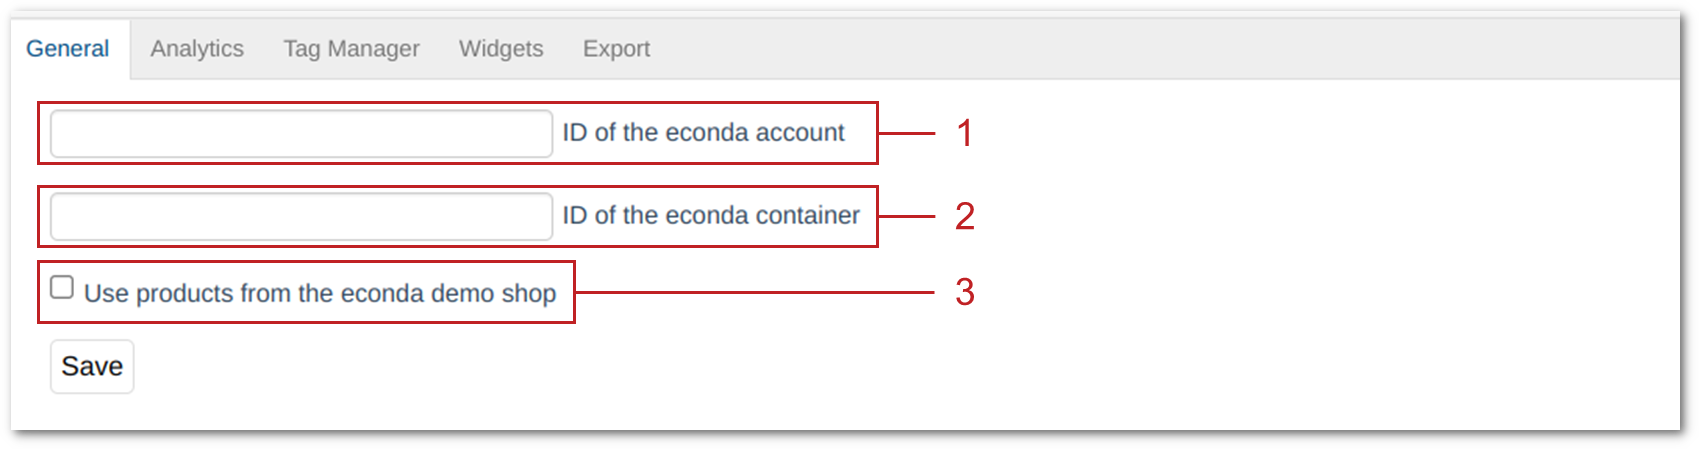 Specifying the econda account ID